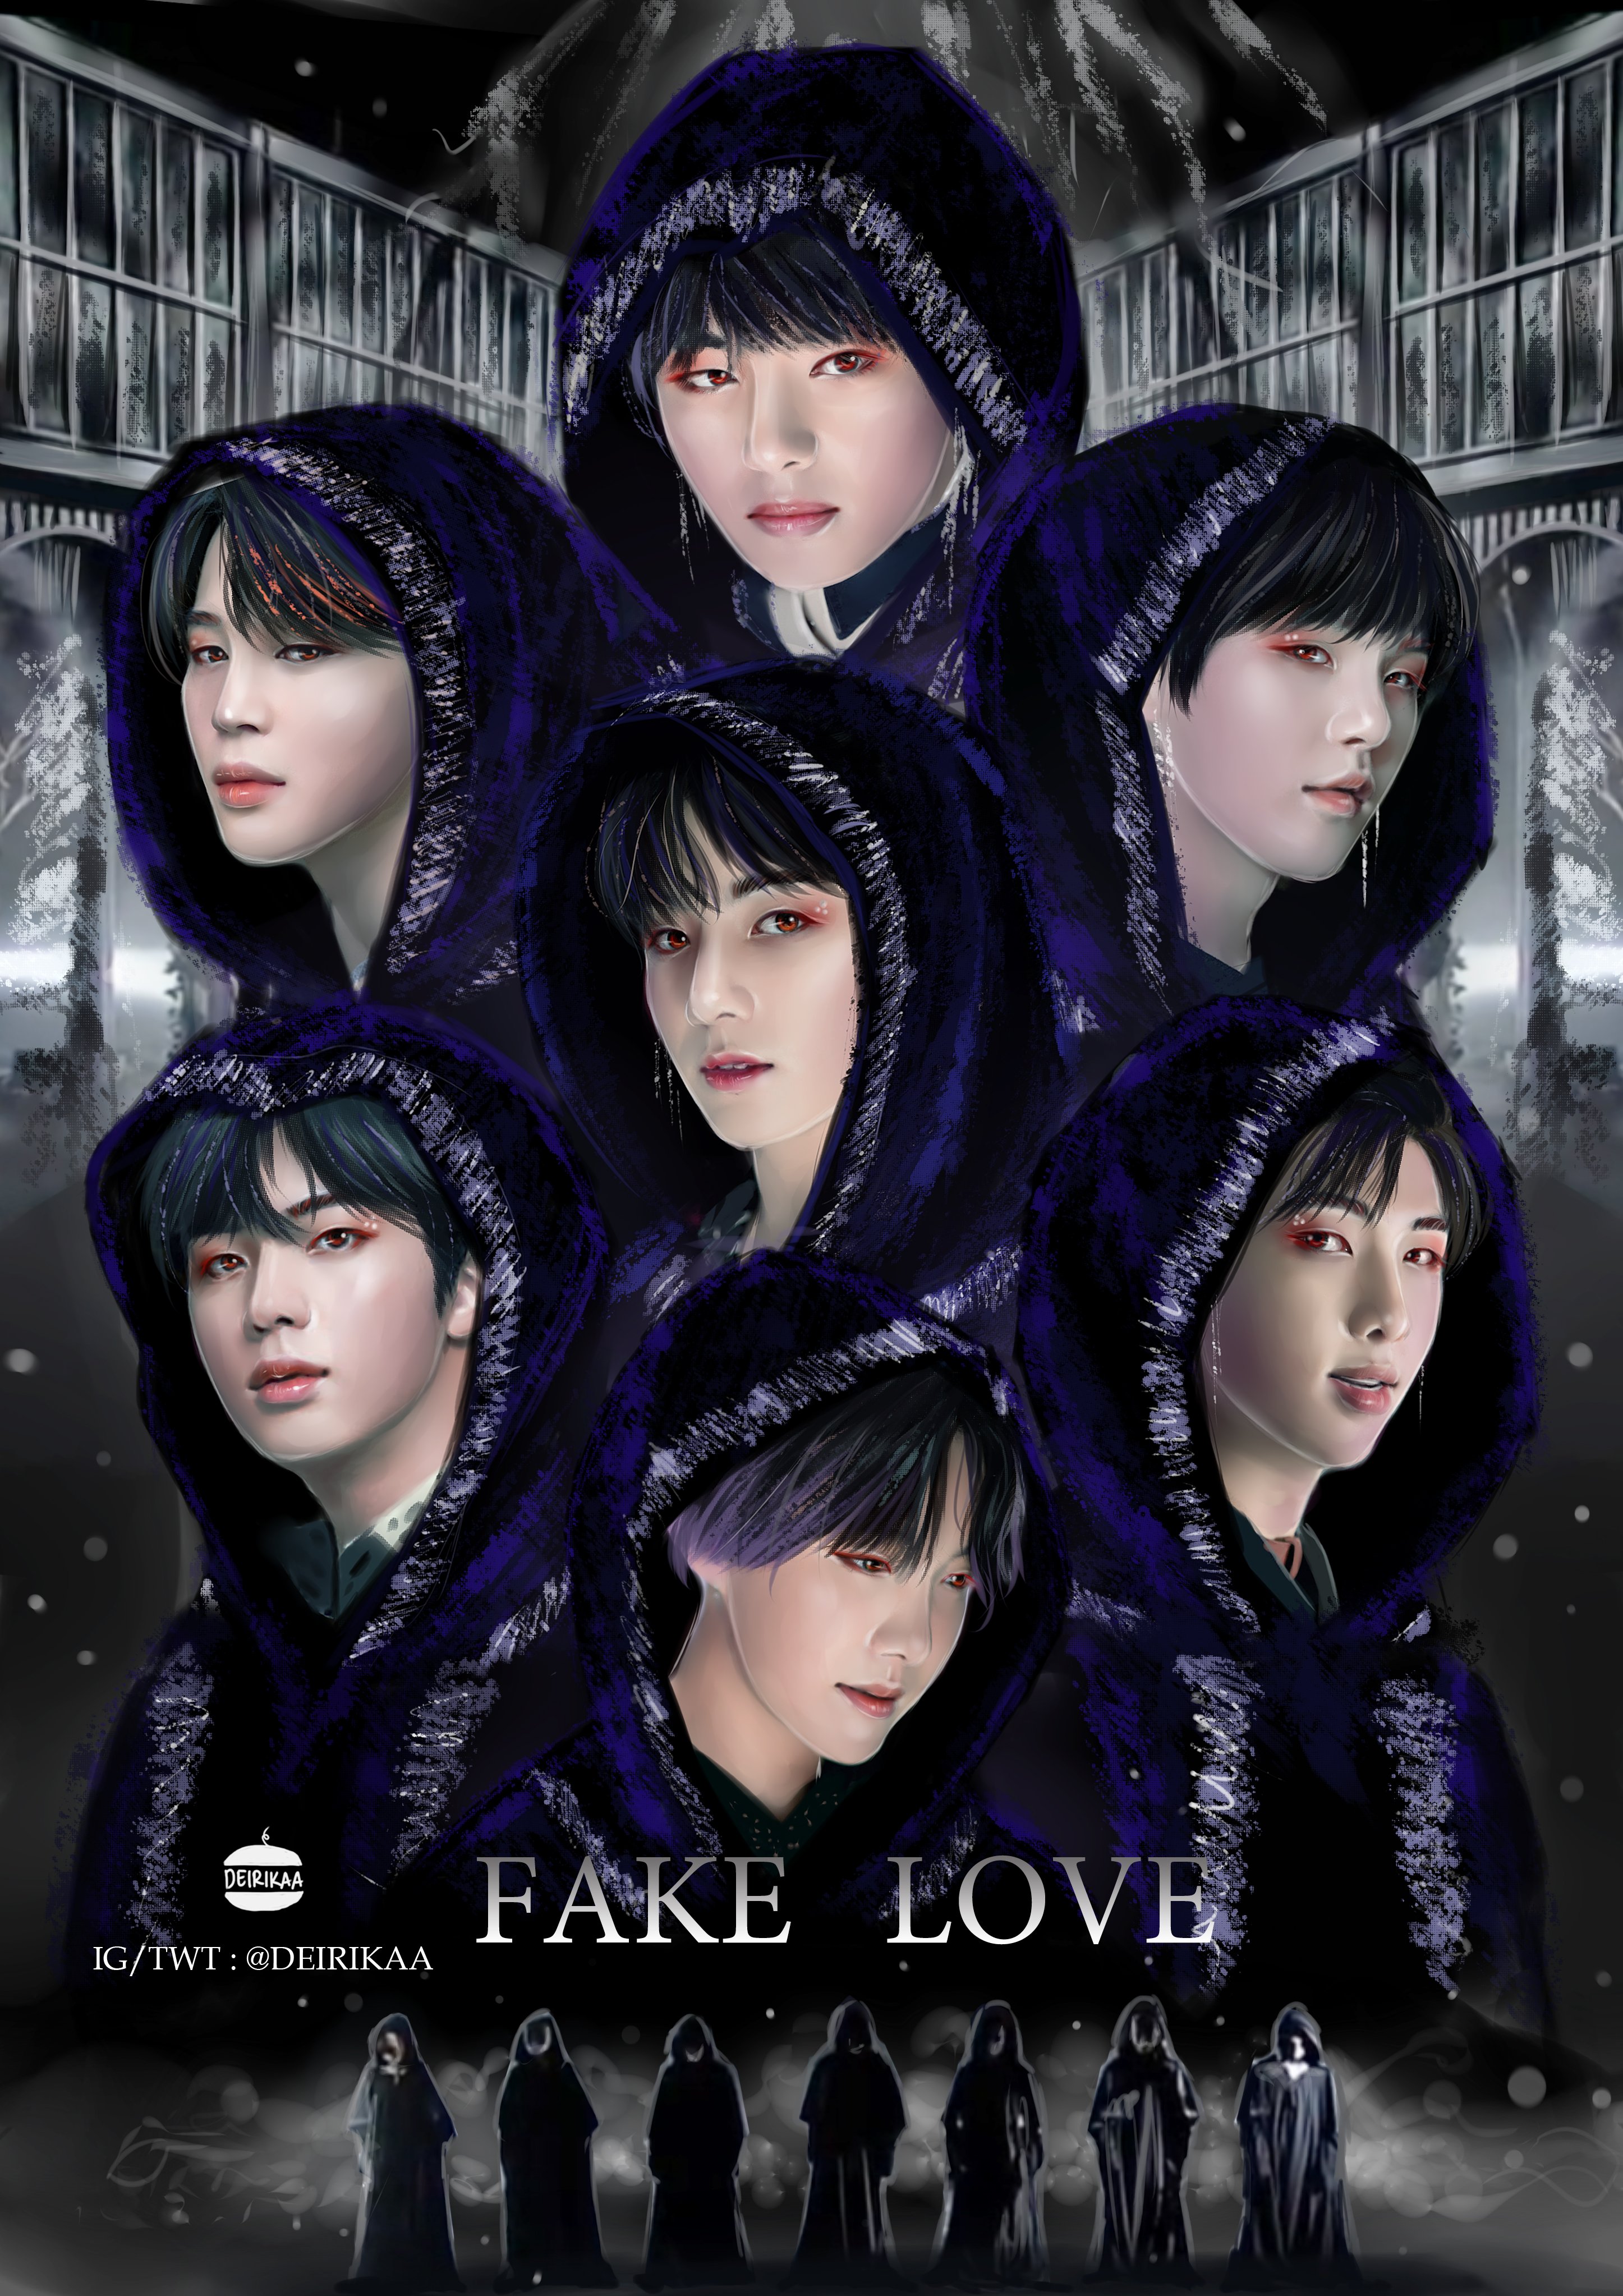 Fake love in purple lavender - Fake Love Bts - Sticker | TeePublic